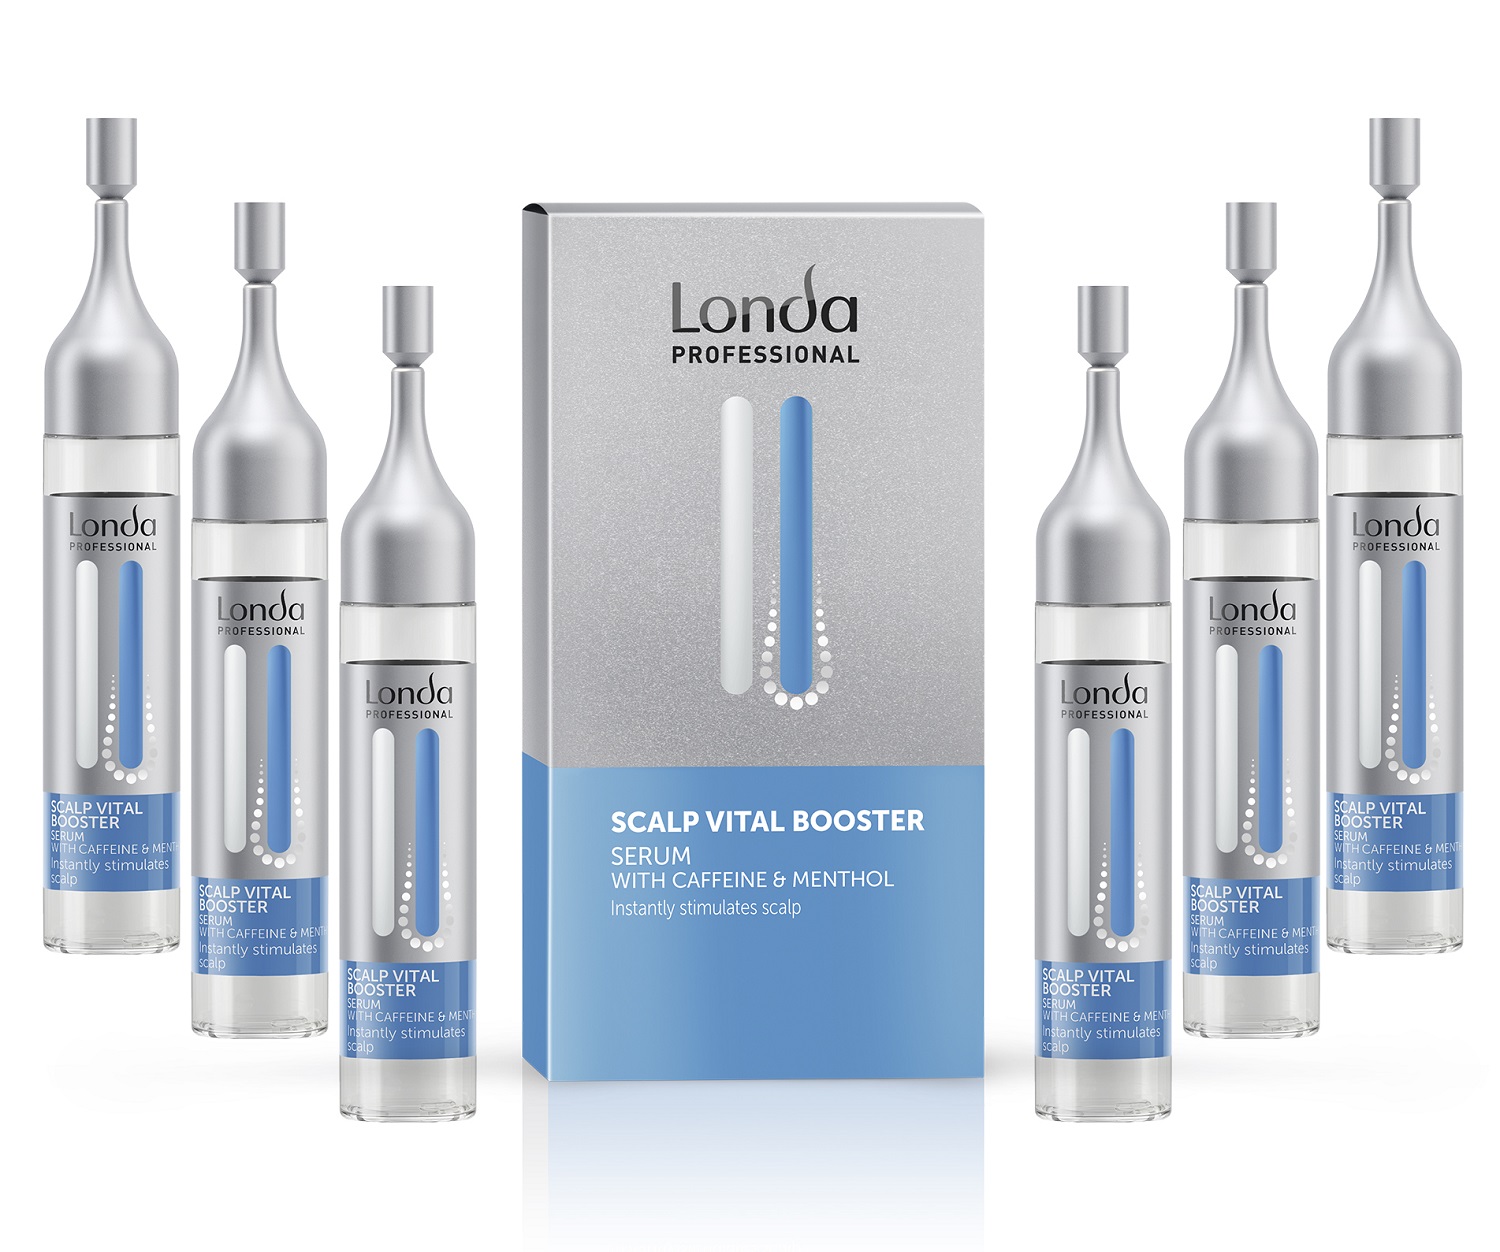 Londa Professional Укрепляющая сыворотка Vital Booster, 6 x 9 мл (Londa Professional, Scalp)